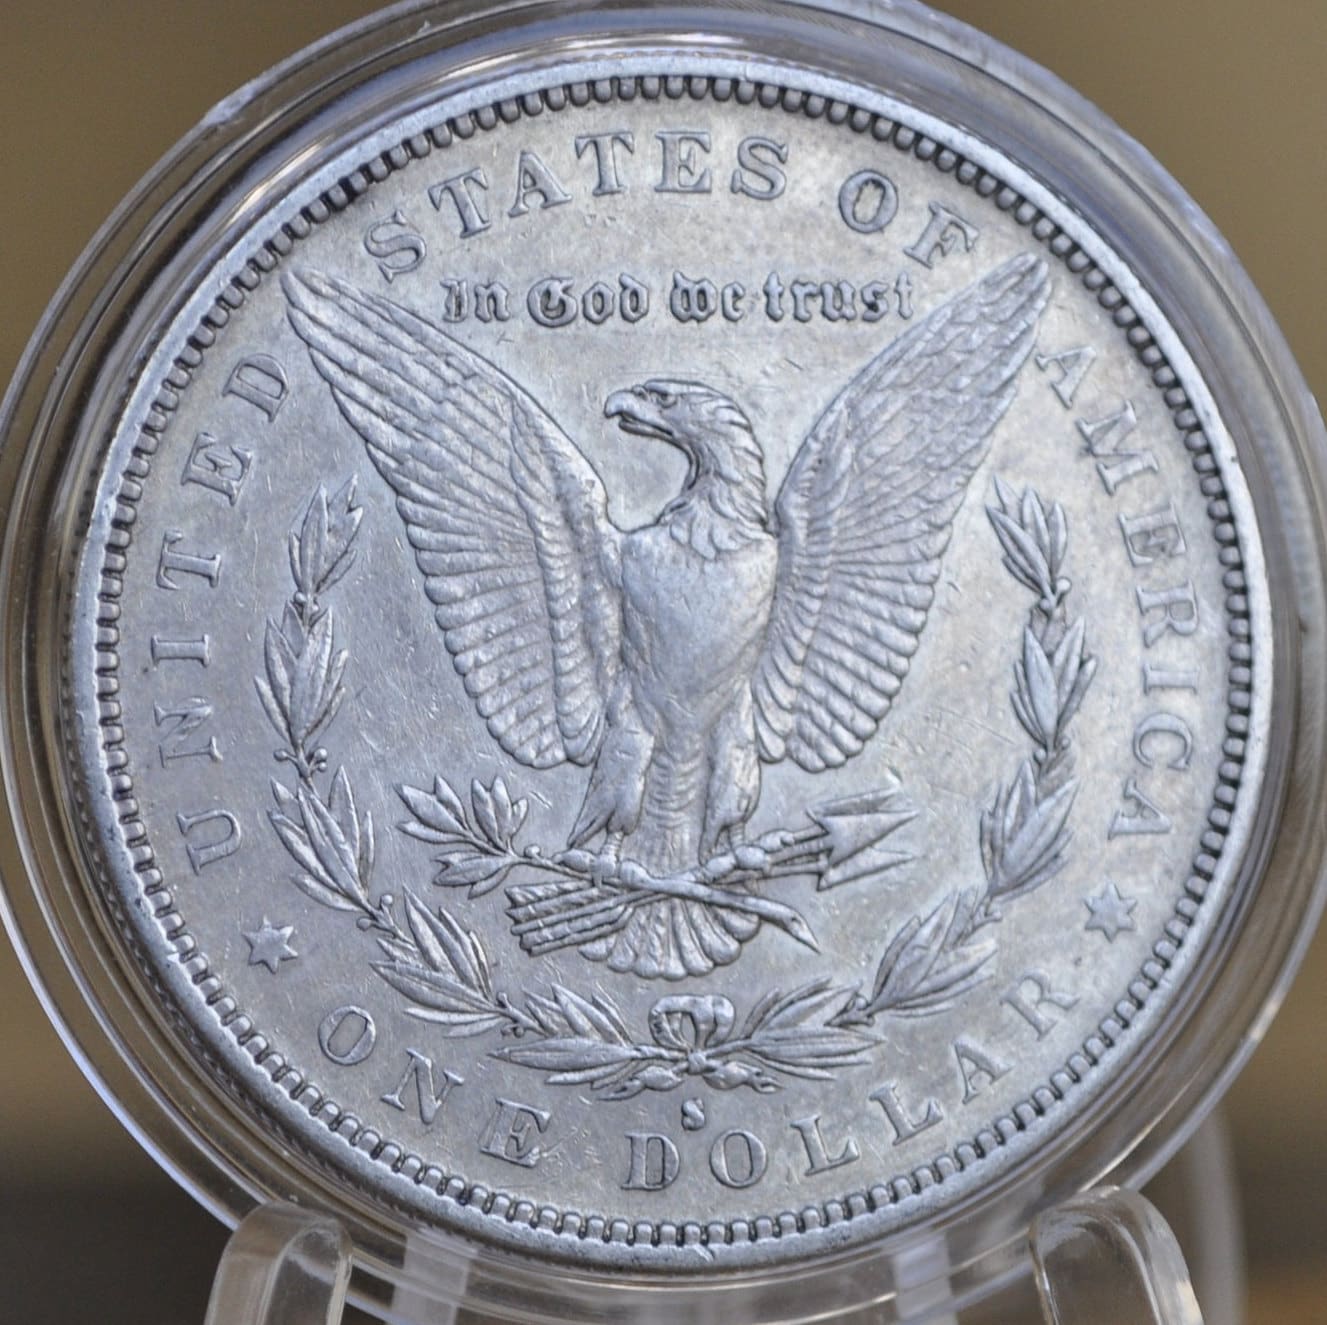 1883-S Morgan Silver Dollar - Choose by Grade / Condition - San Francisco Mint - 1883 S Morgan Dollar - Better Date & Mint